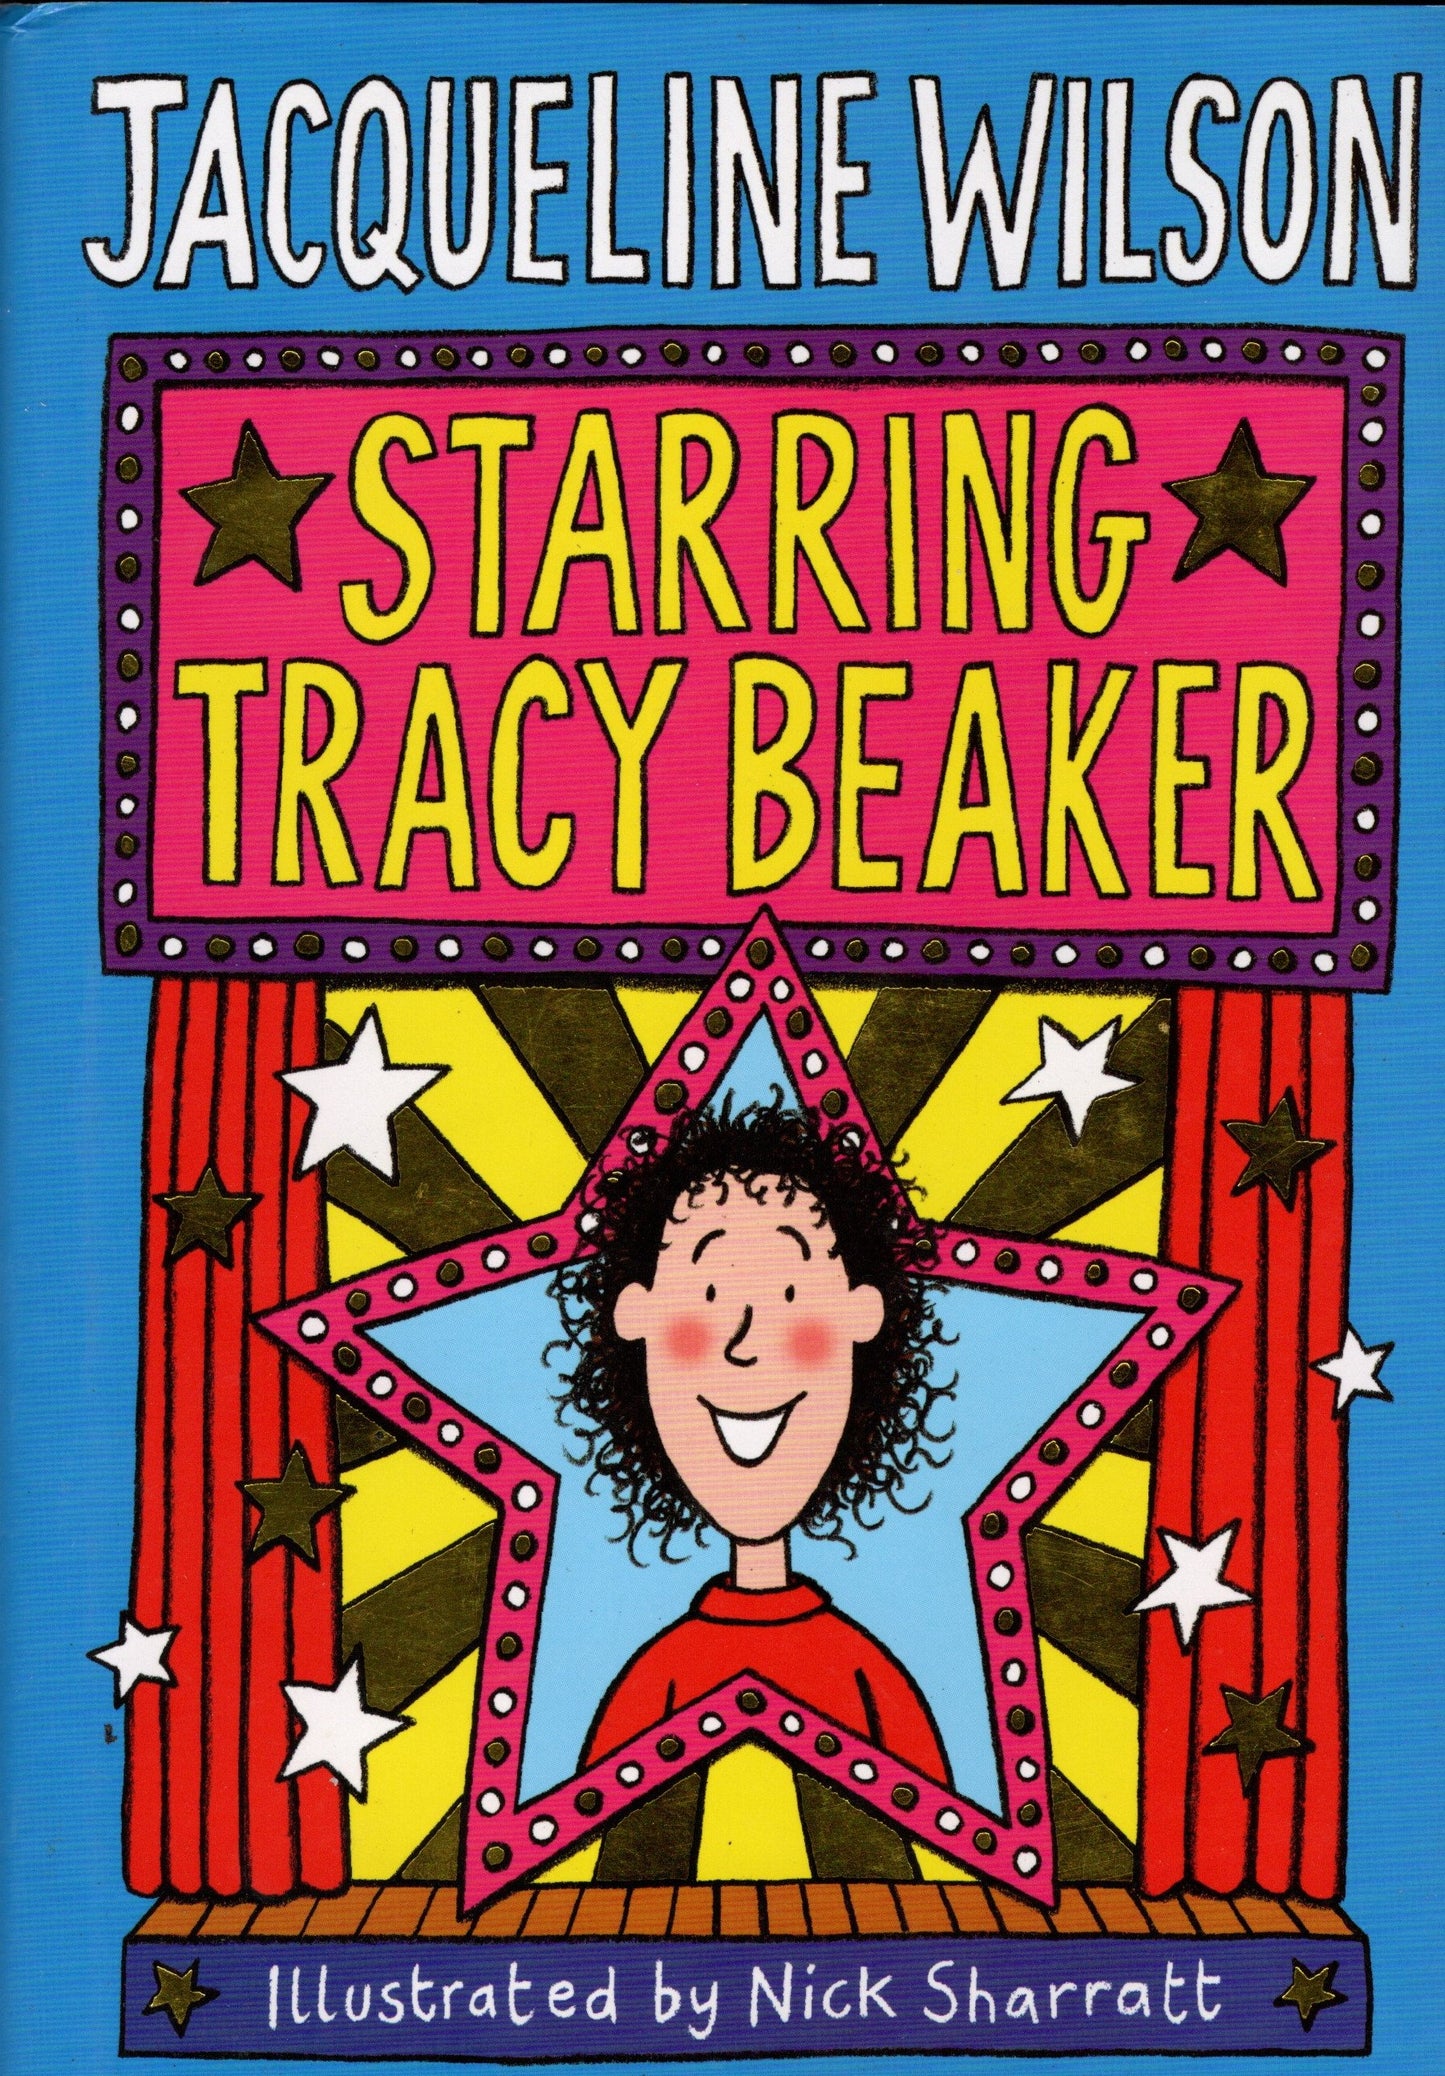 LIVRO STARRING TRACY BEAKER (Hardcover) by Jacqueline Wilson (EN) - USADO